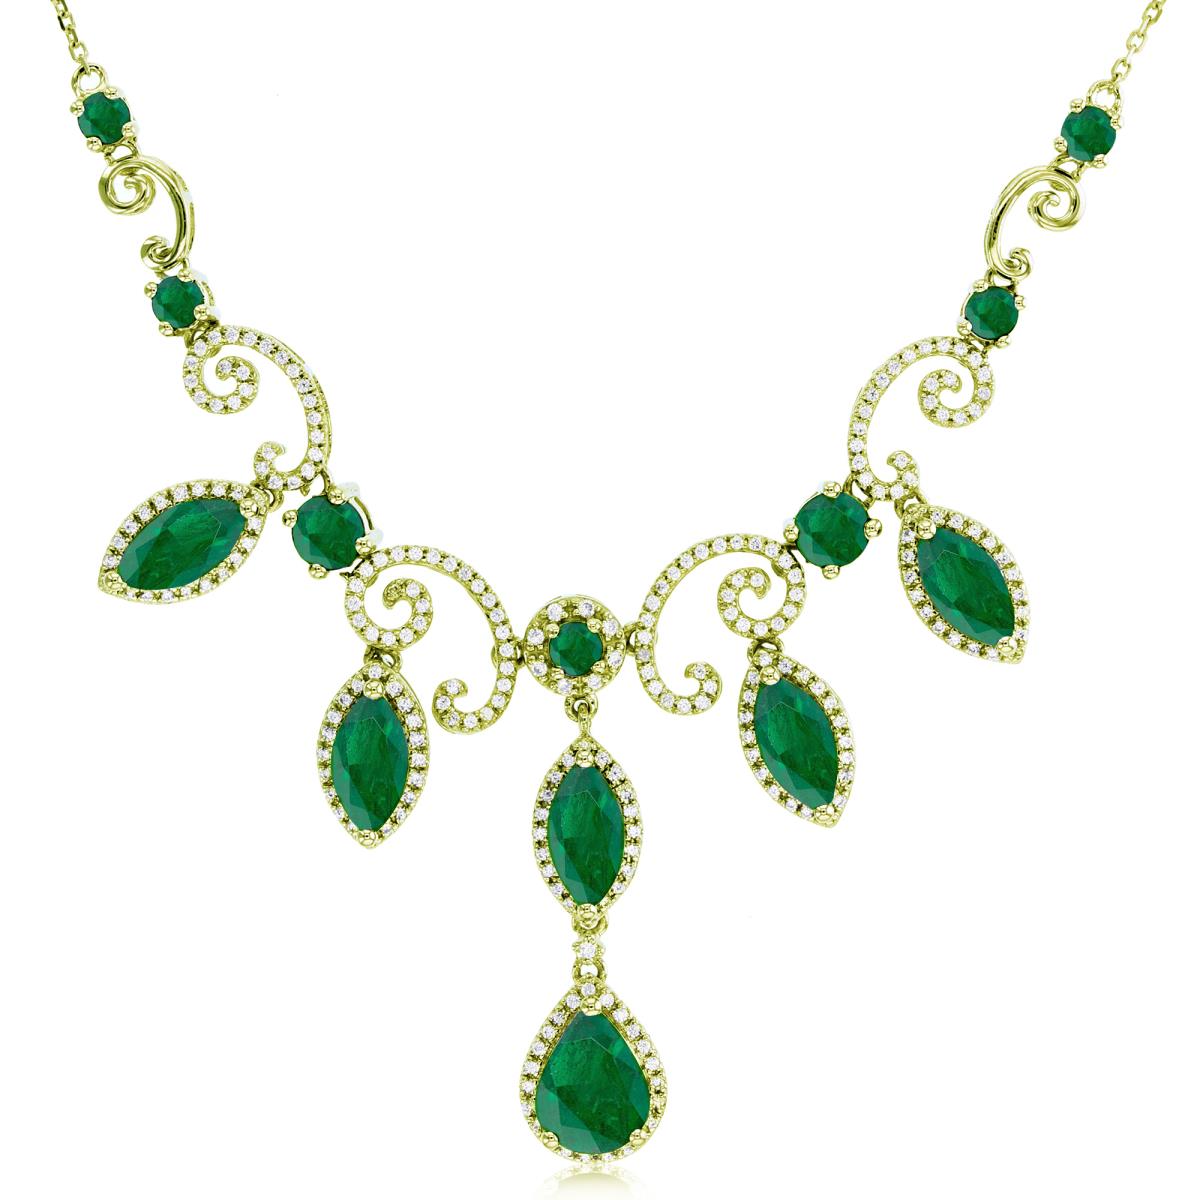 10K Yellow Gold 0.50cttw Rnd Diamonds & Multishape Cr.Emerald Filigree Swirl Dangling 18"Necklace